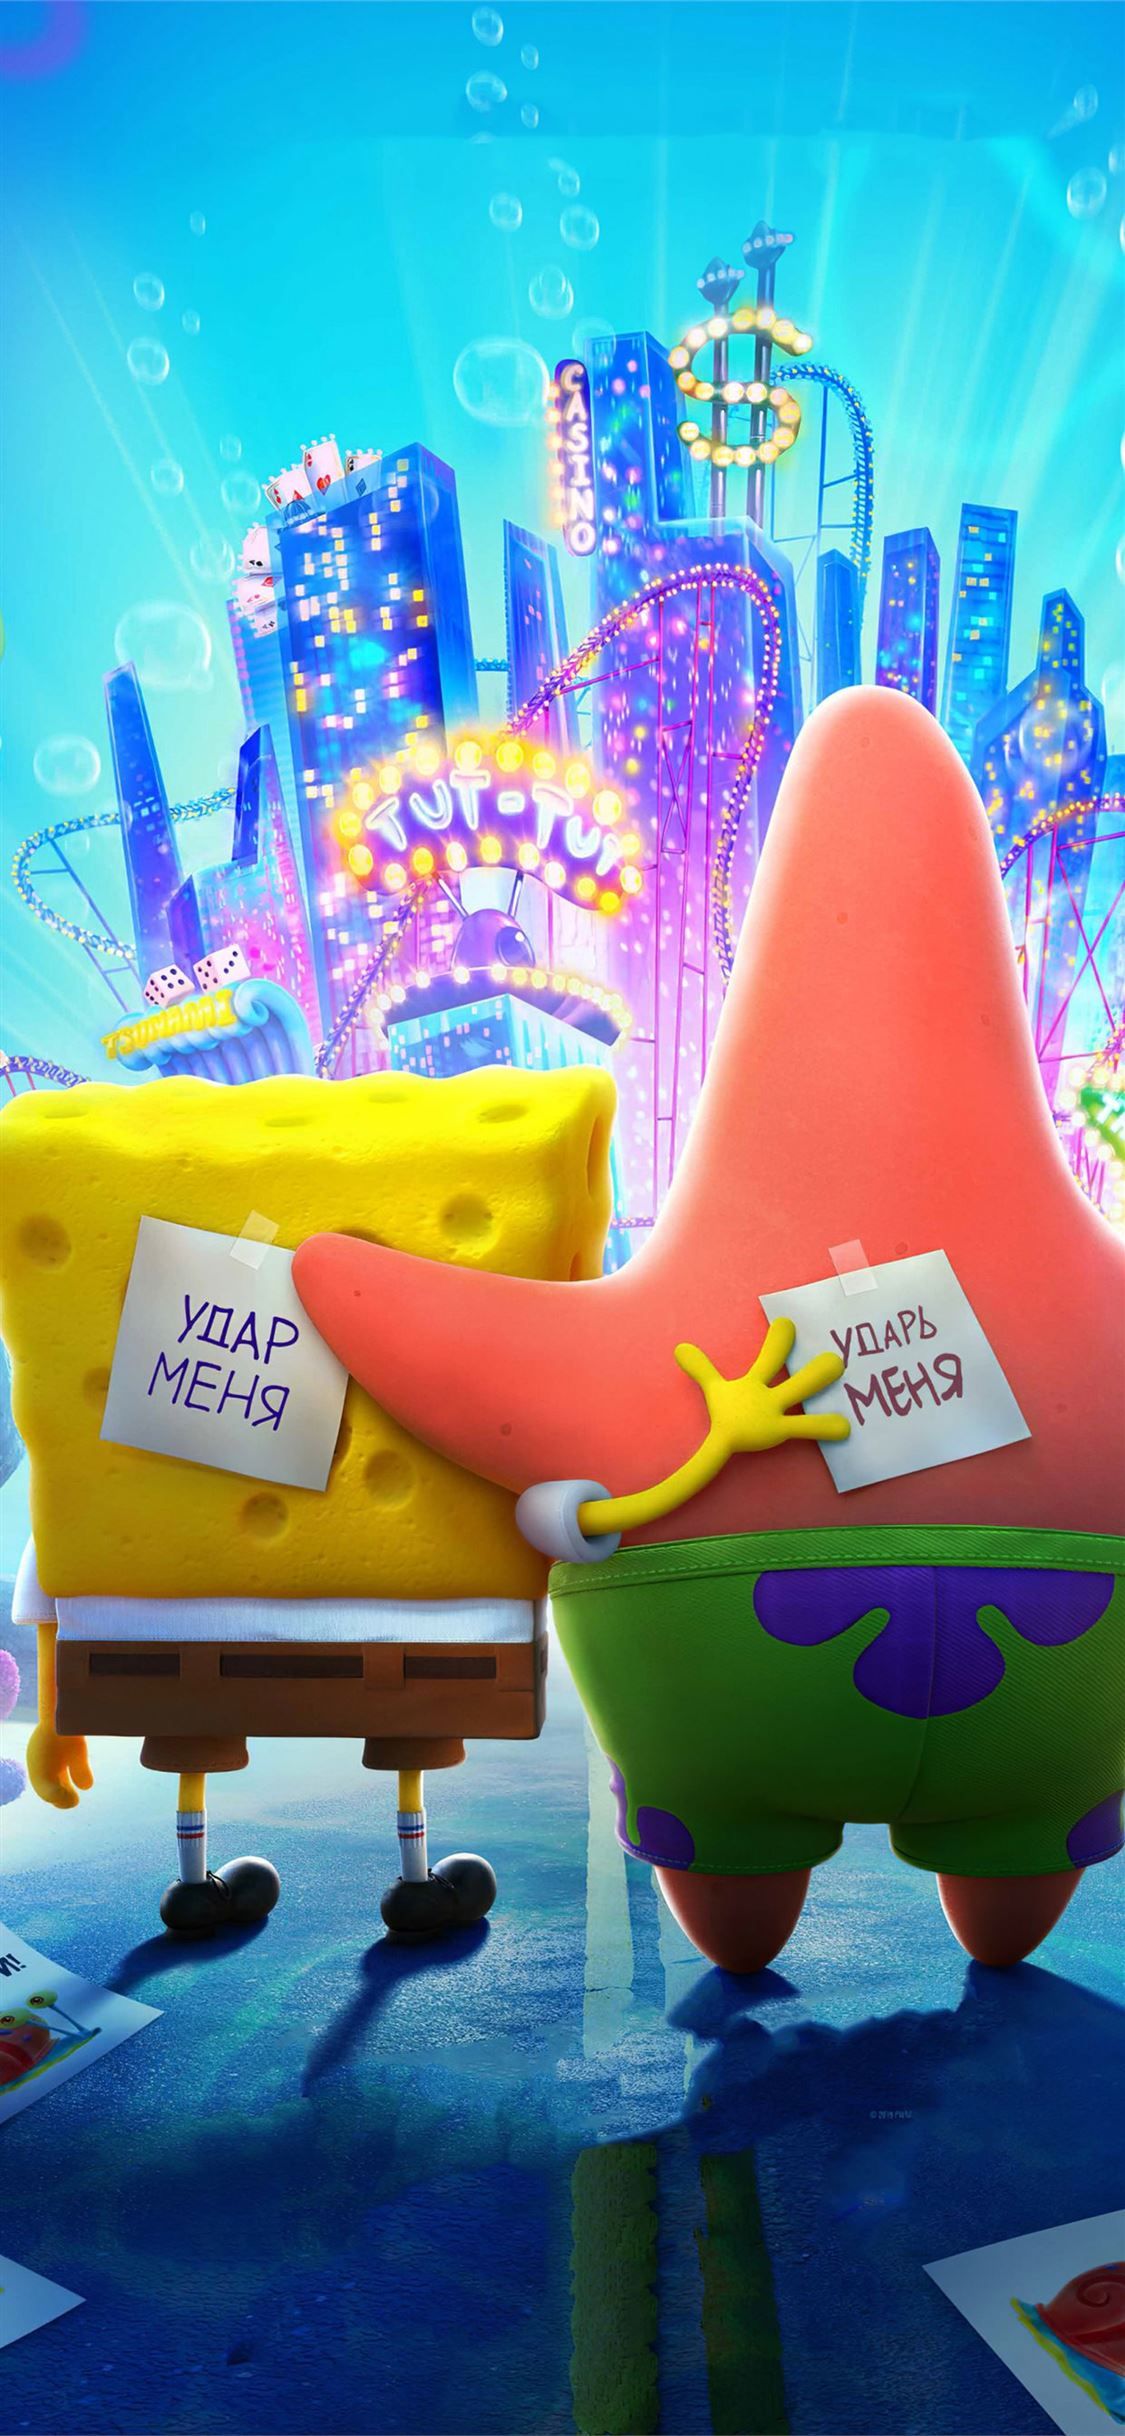 Best The spongebob movie sponge on the run iPhone X Wallpapers HD [2020]